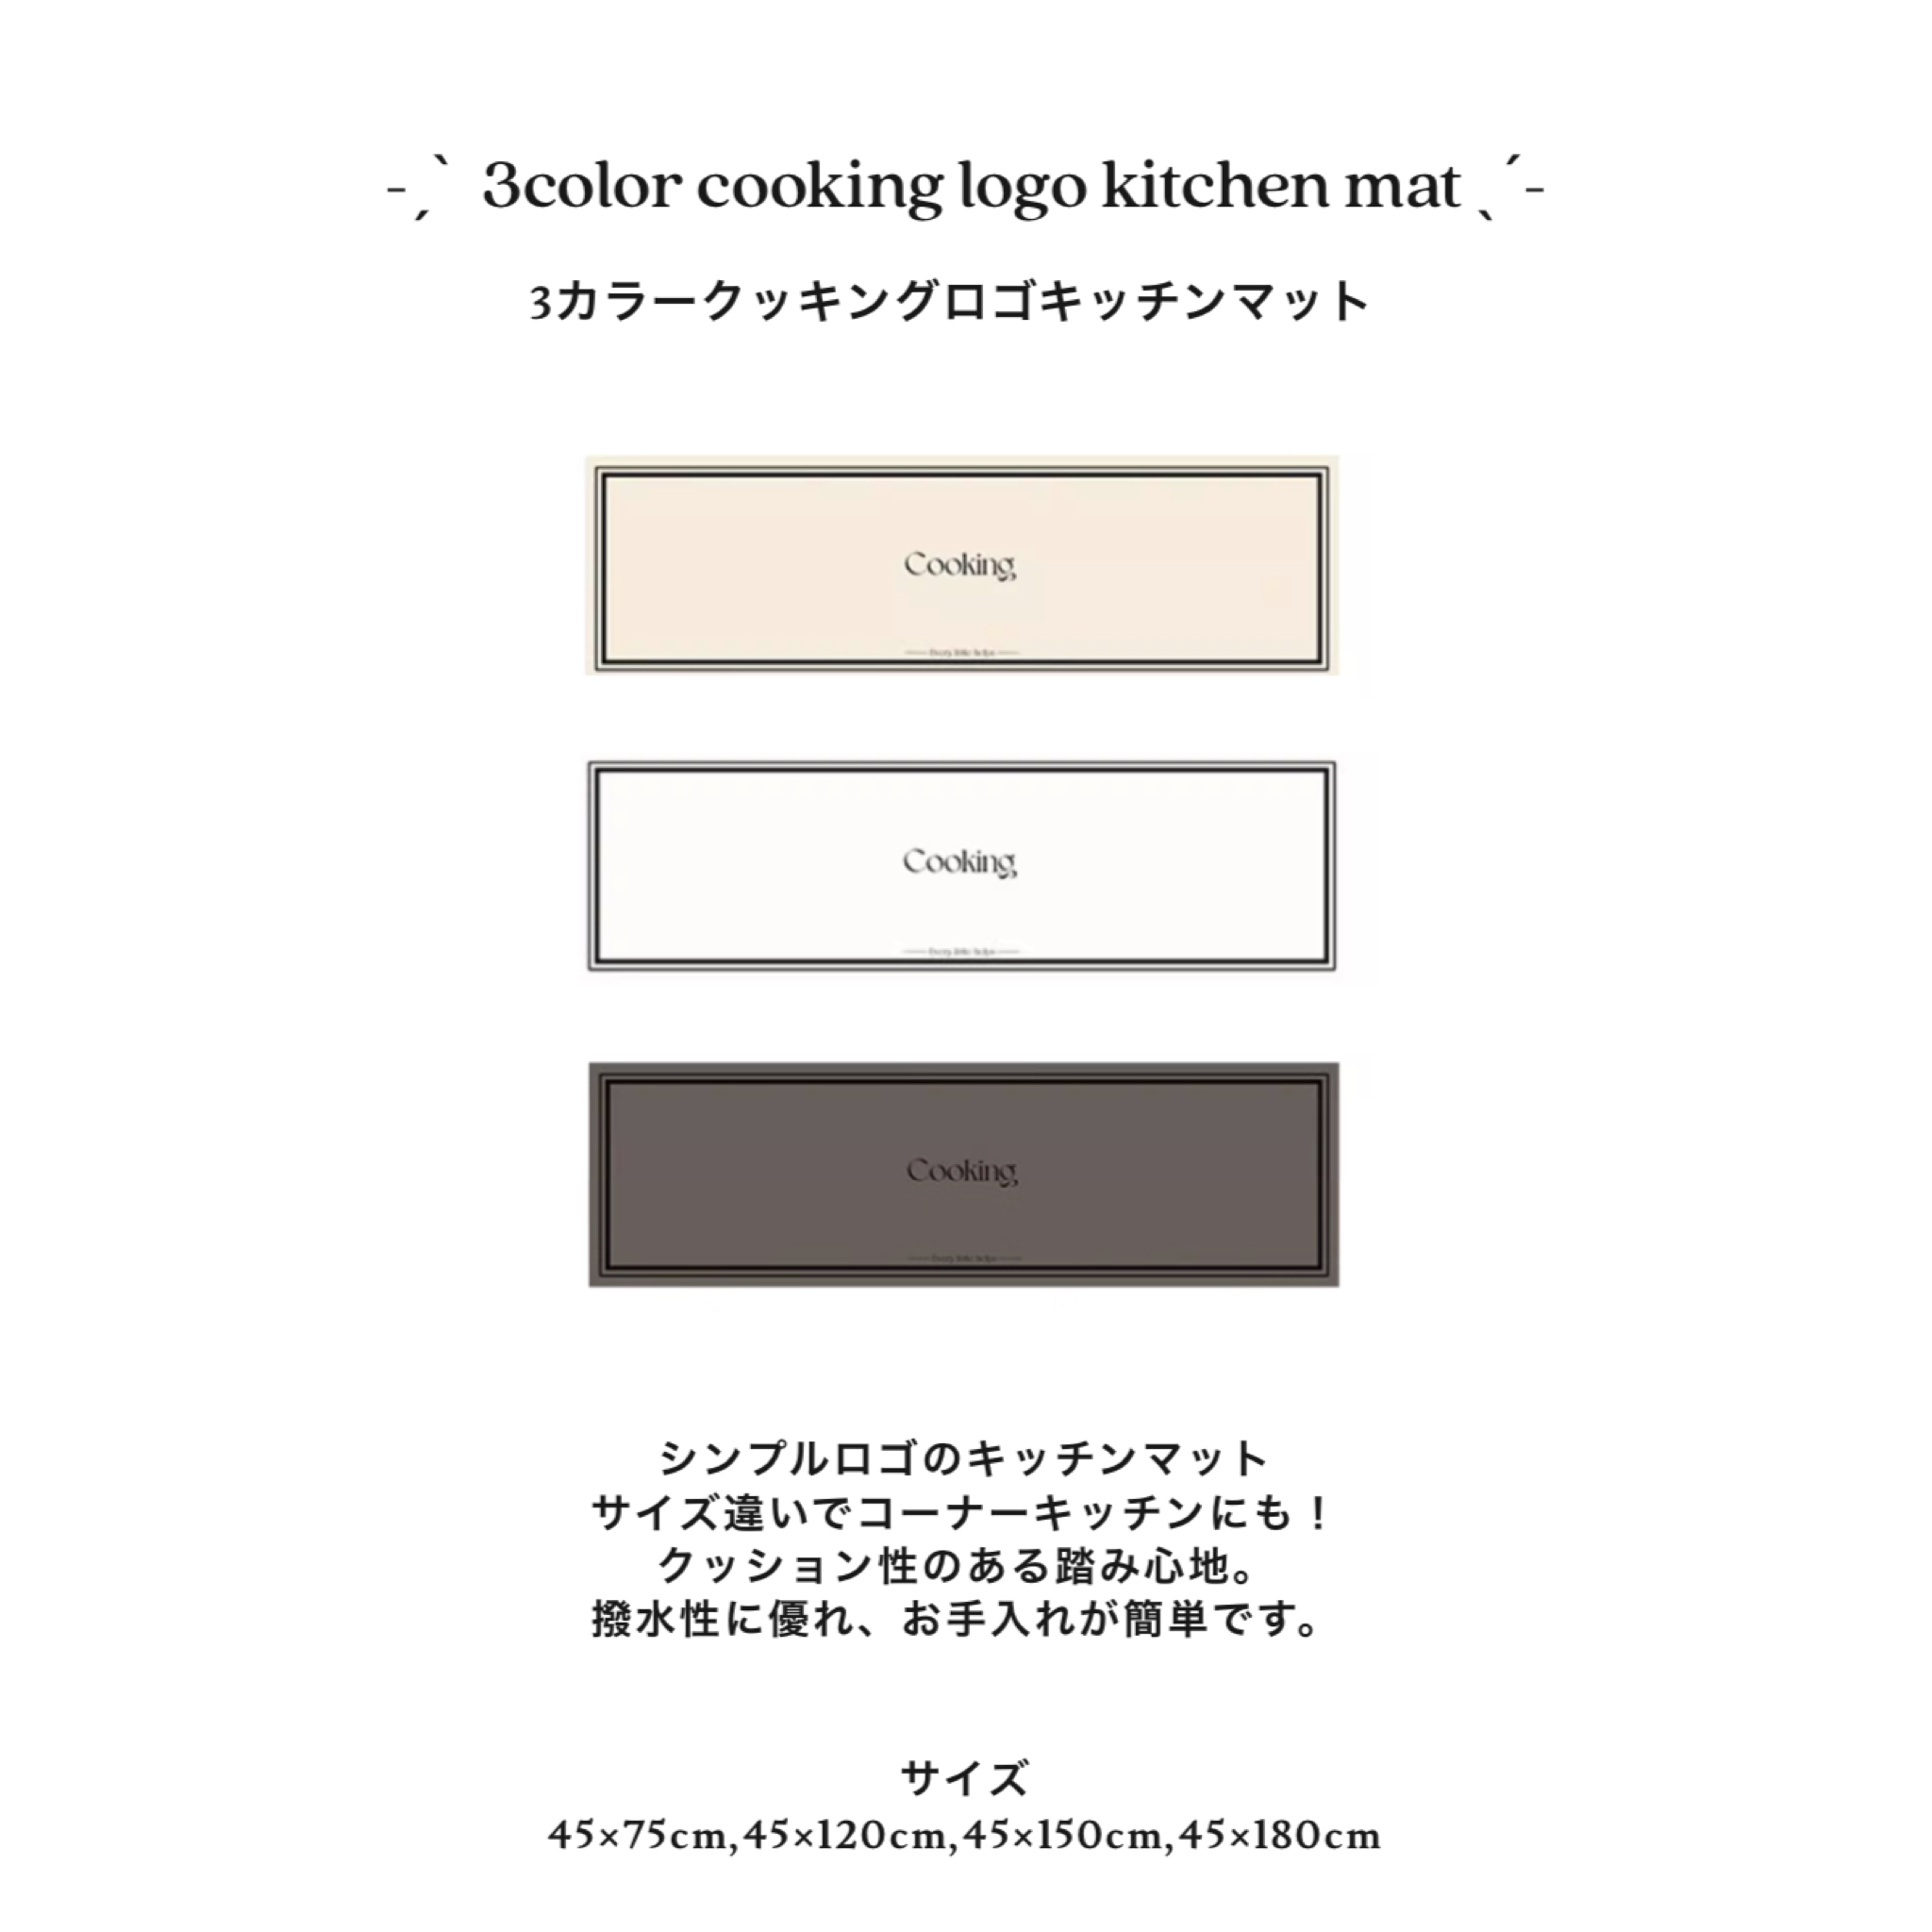 3color cooking logo kitchen mat